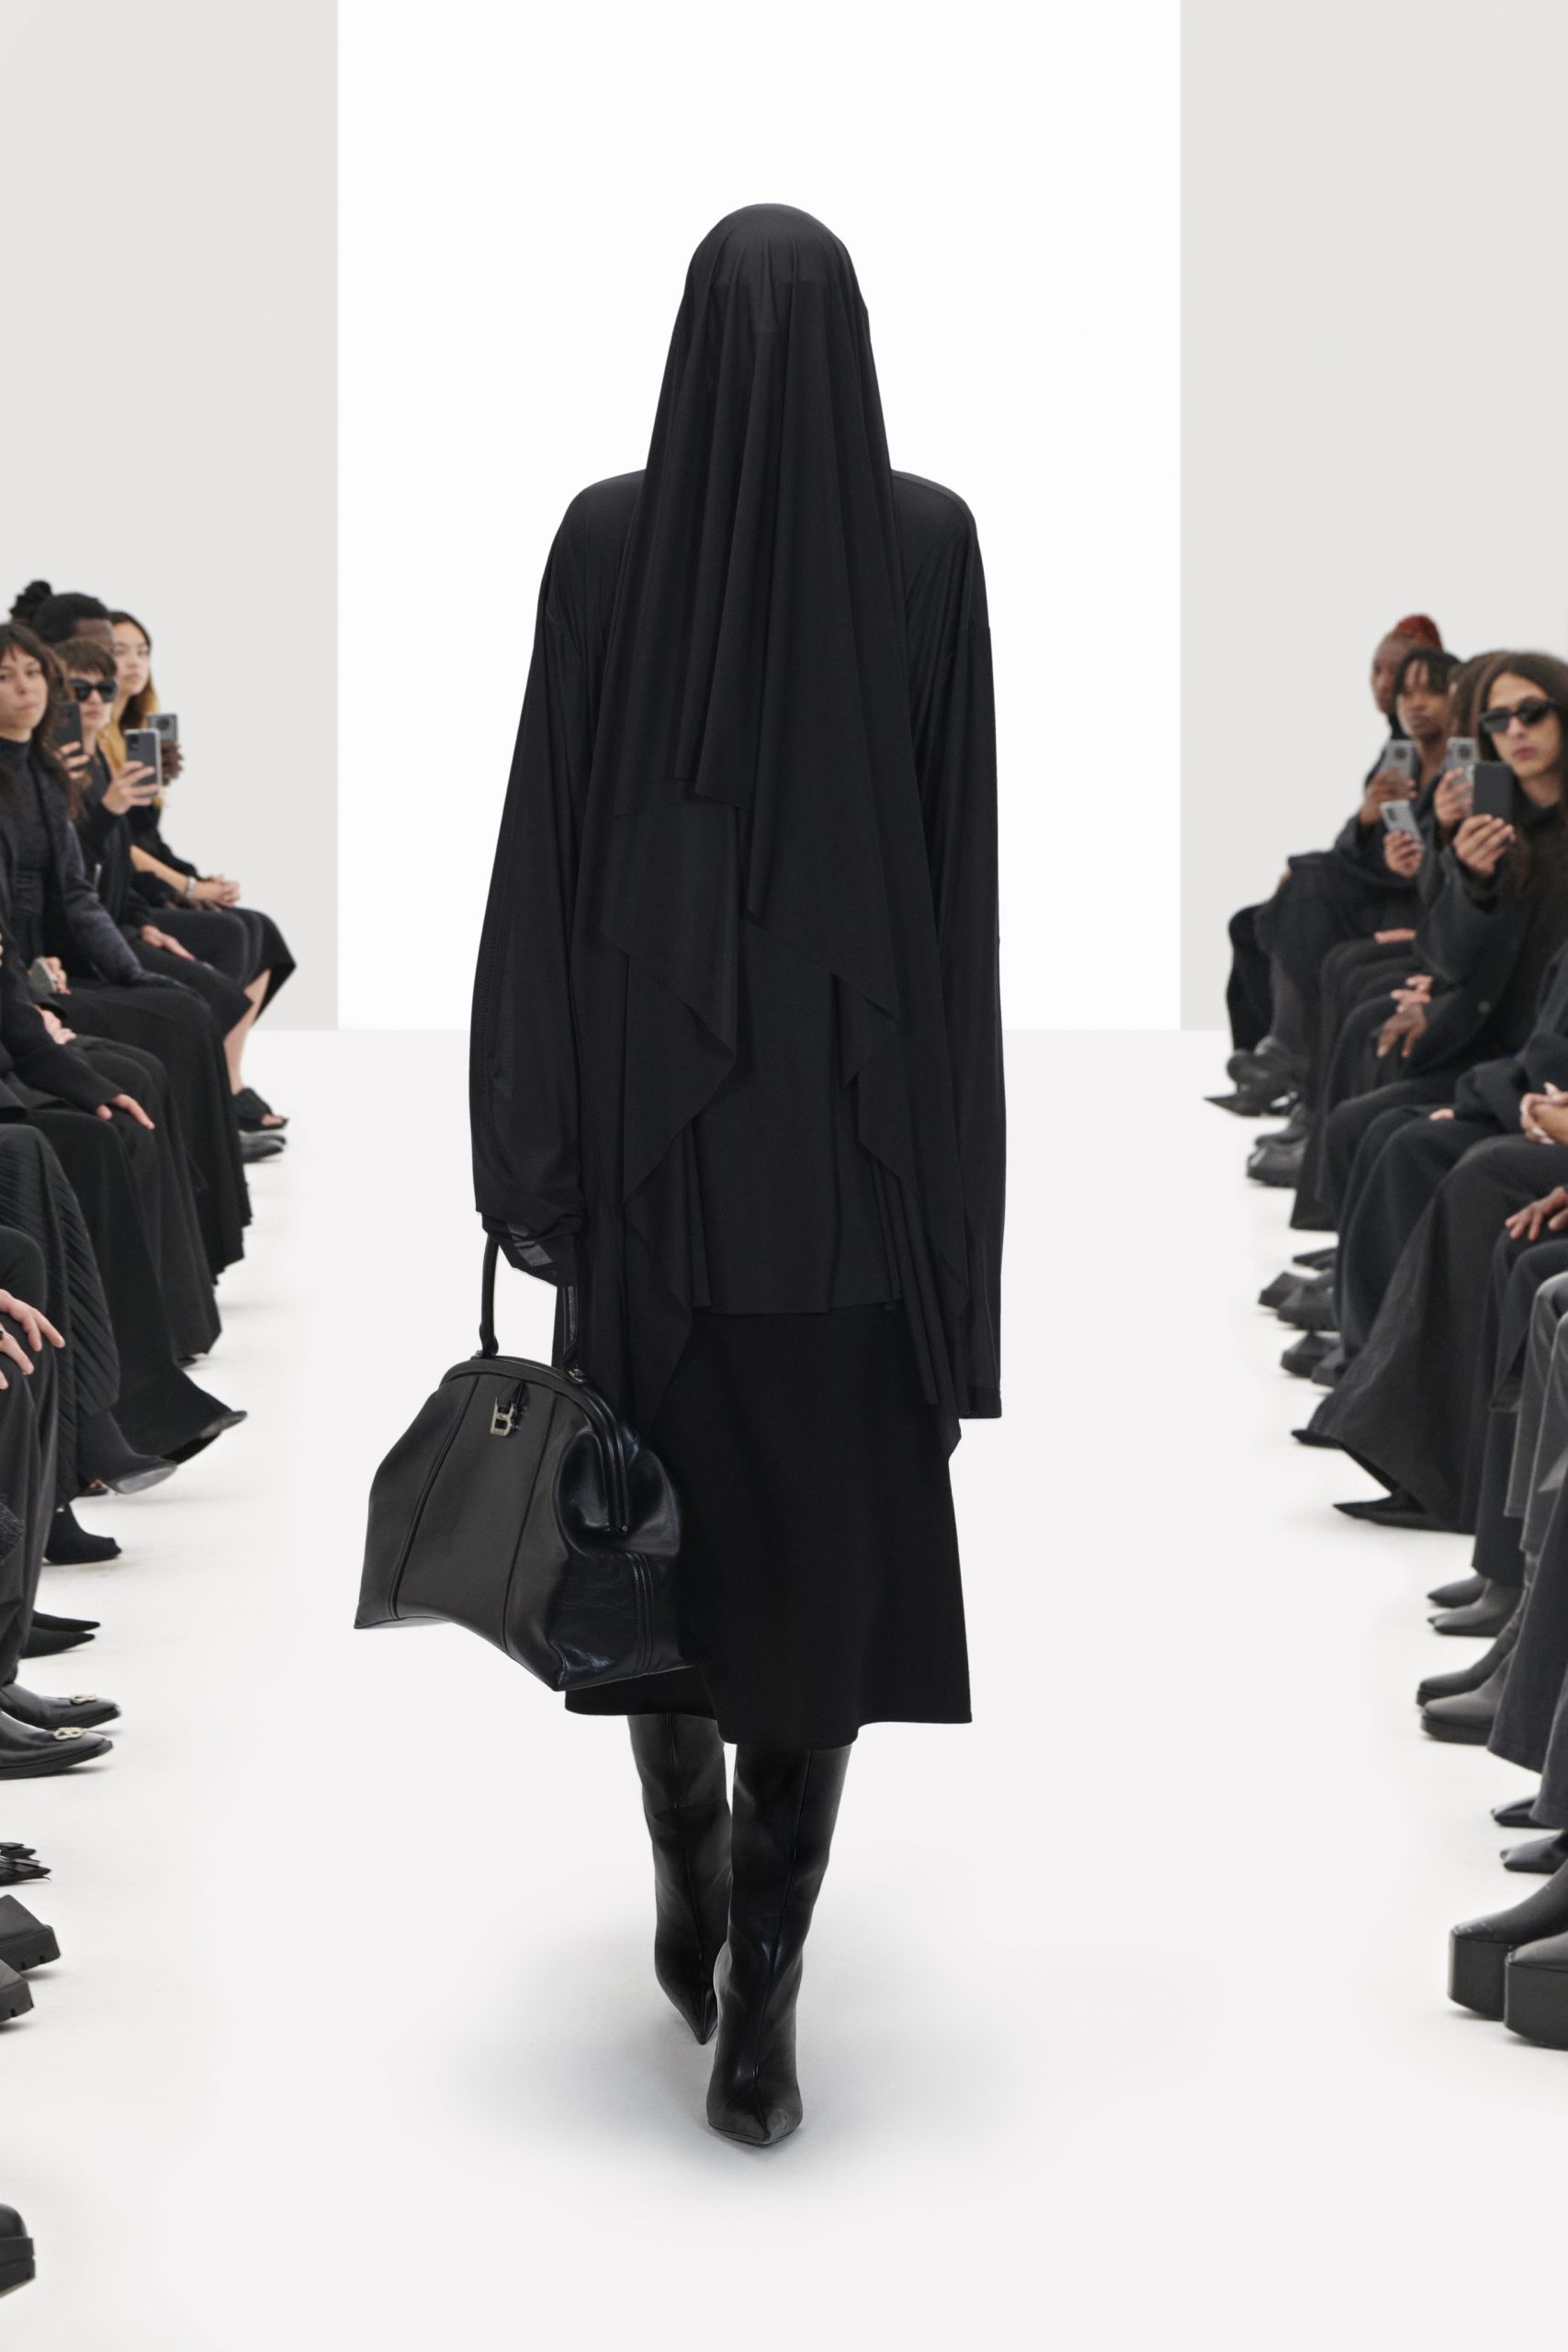 Balenciaga Spring 2022 Fashion Show | The Impression